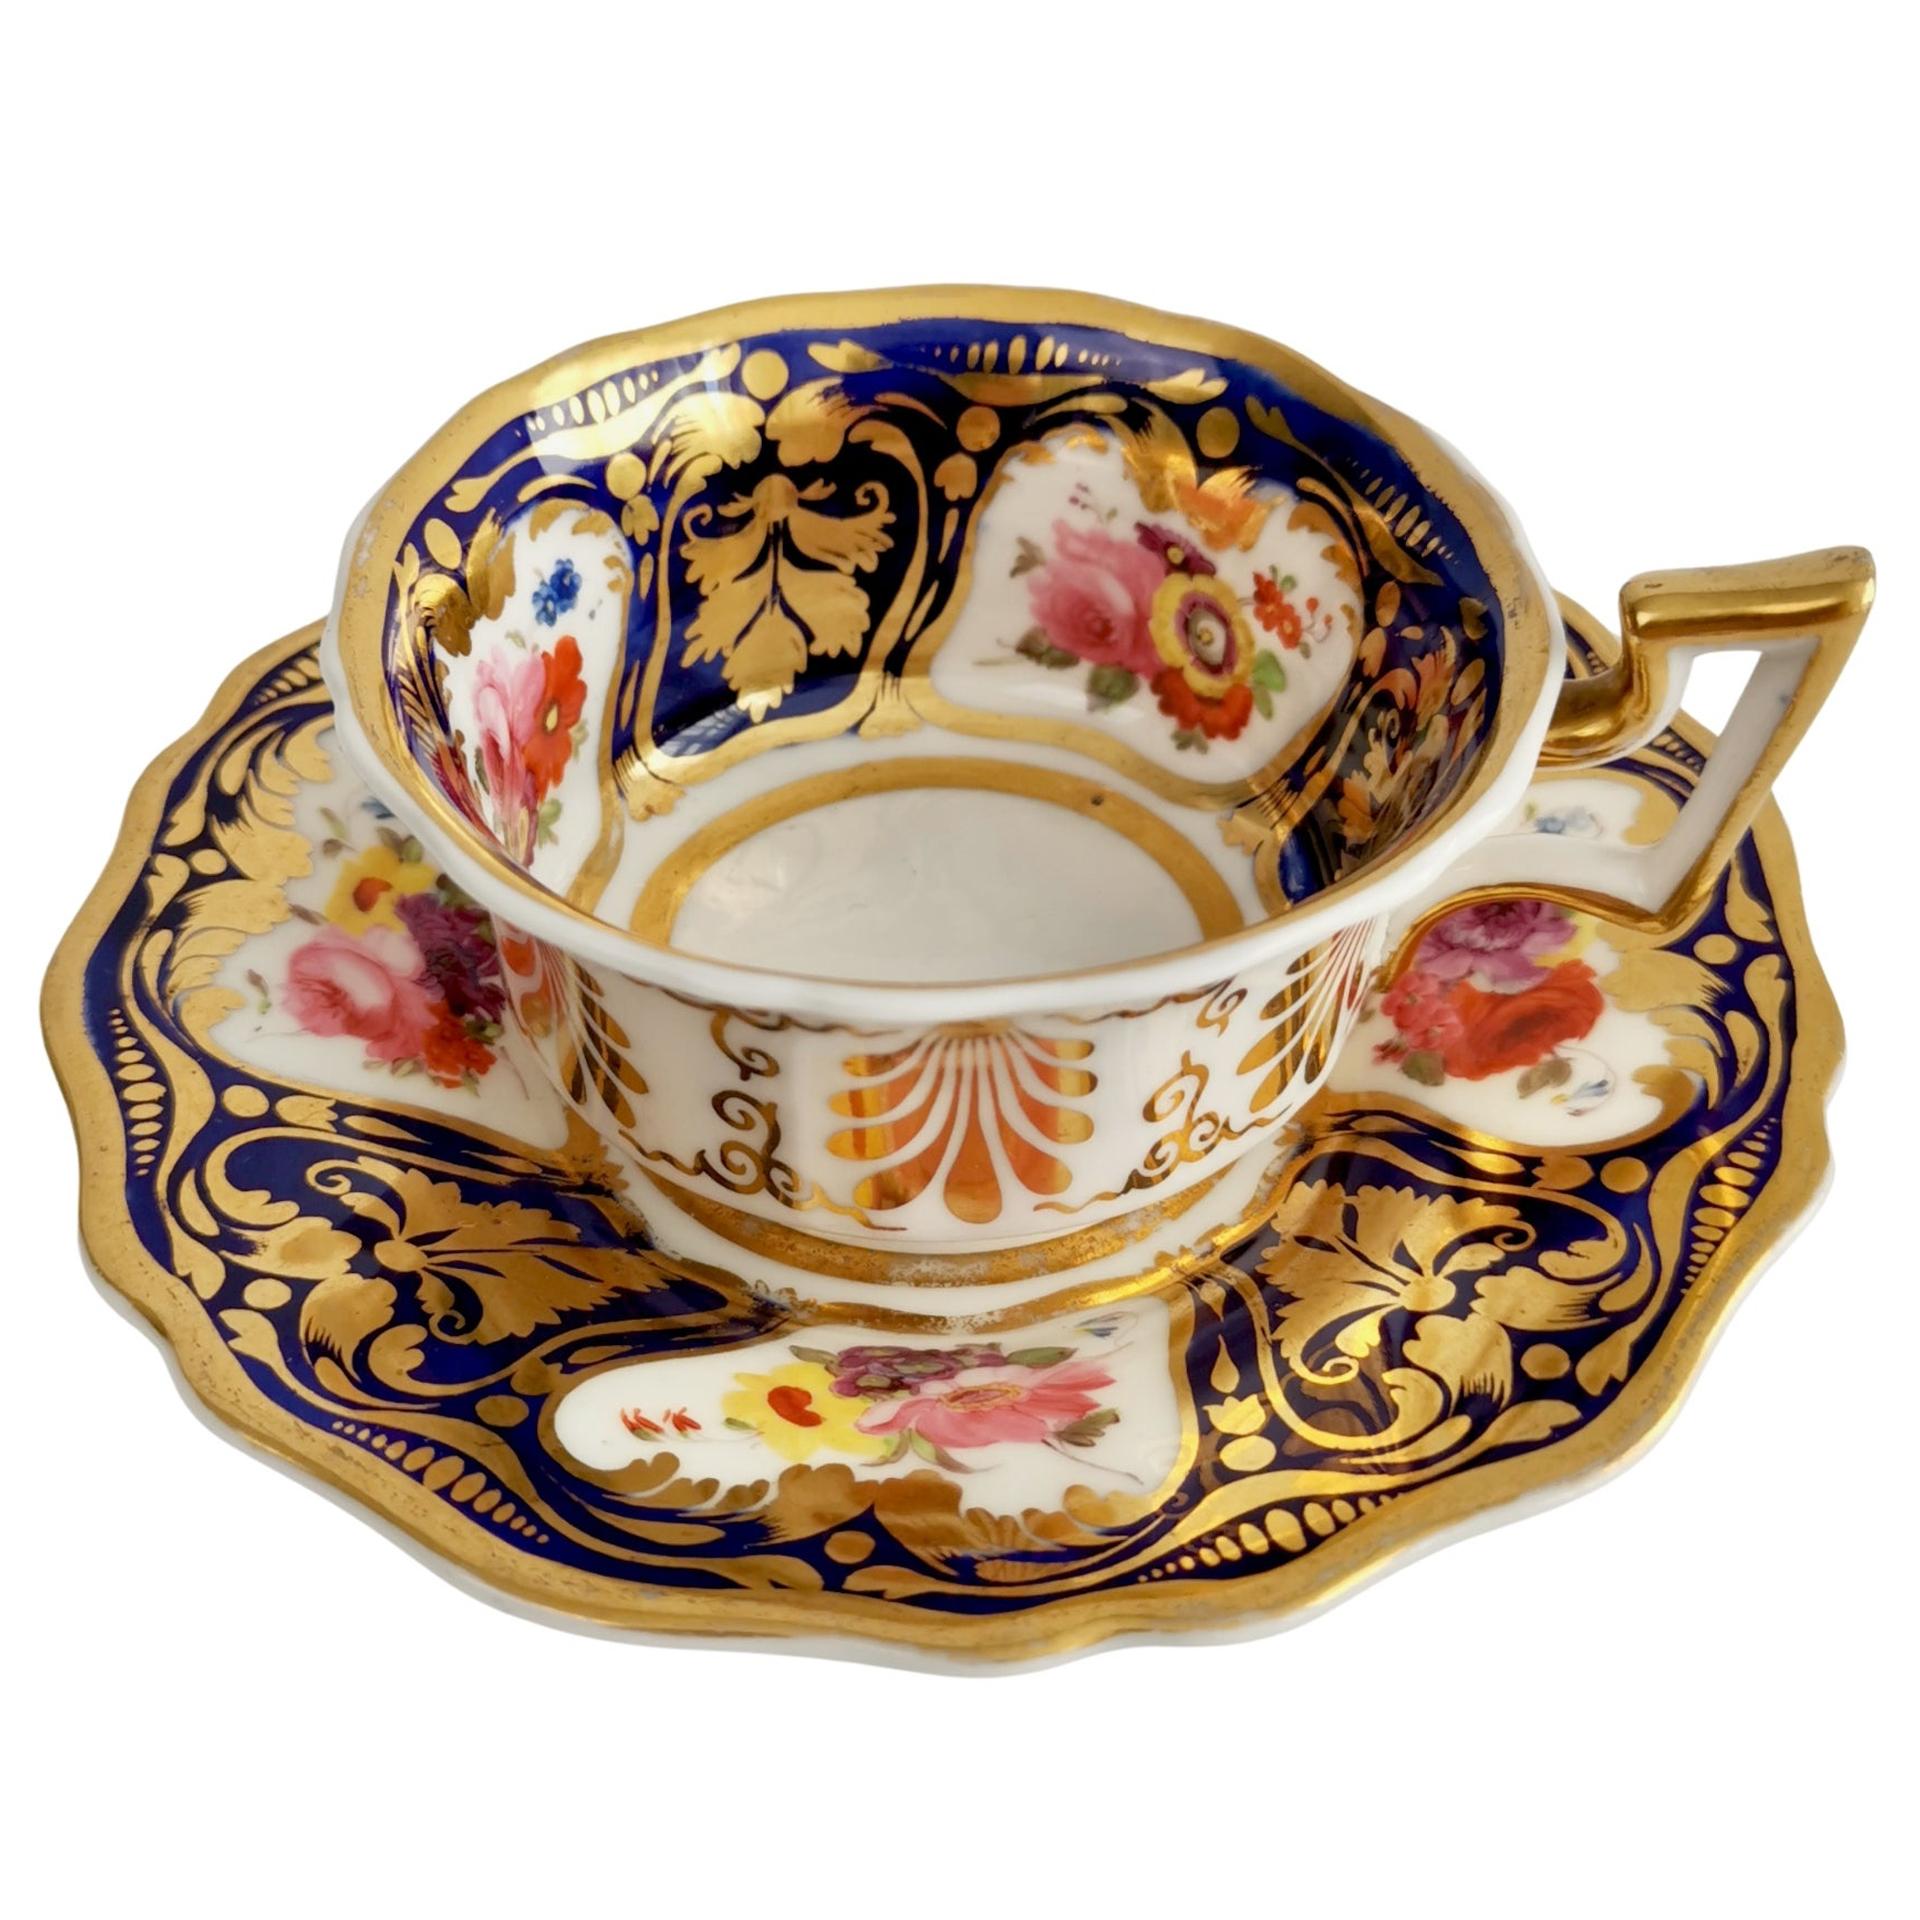 Ridgway Porcelain Teacup, Cobalt Blue, Gilt and Flowers, Regency ca 1825